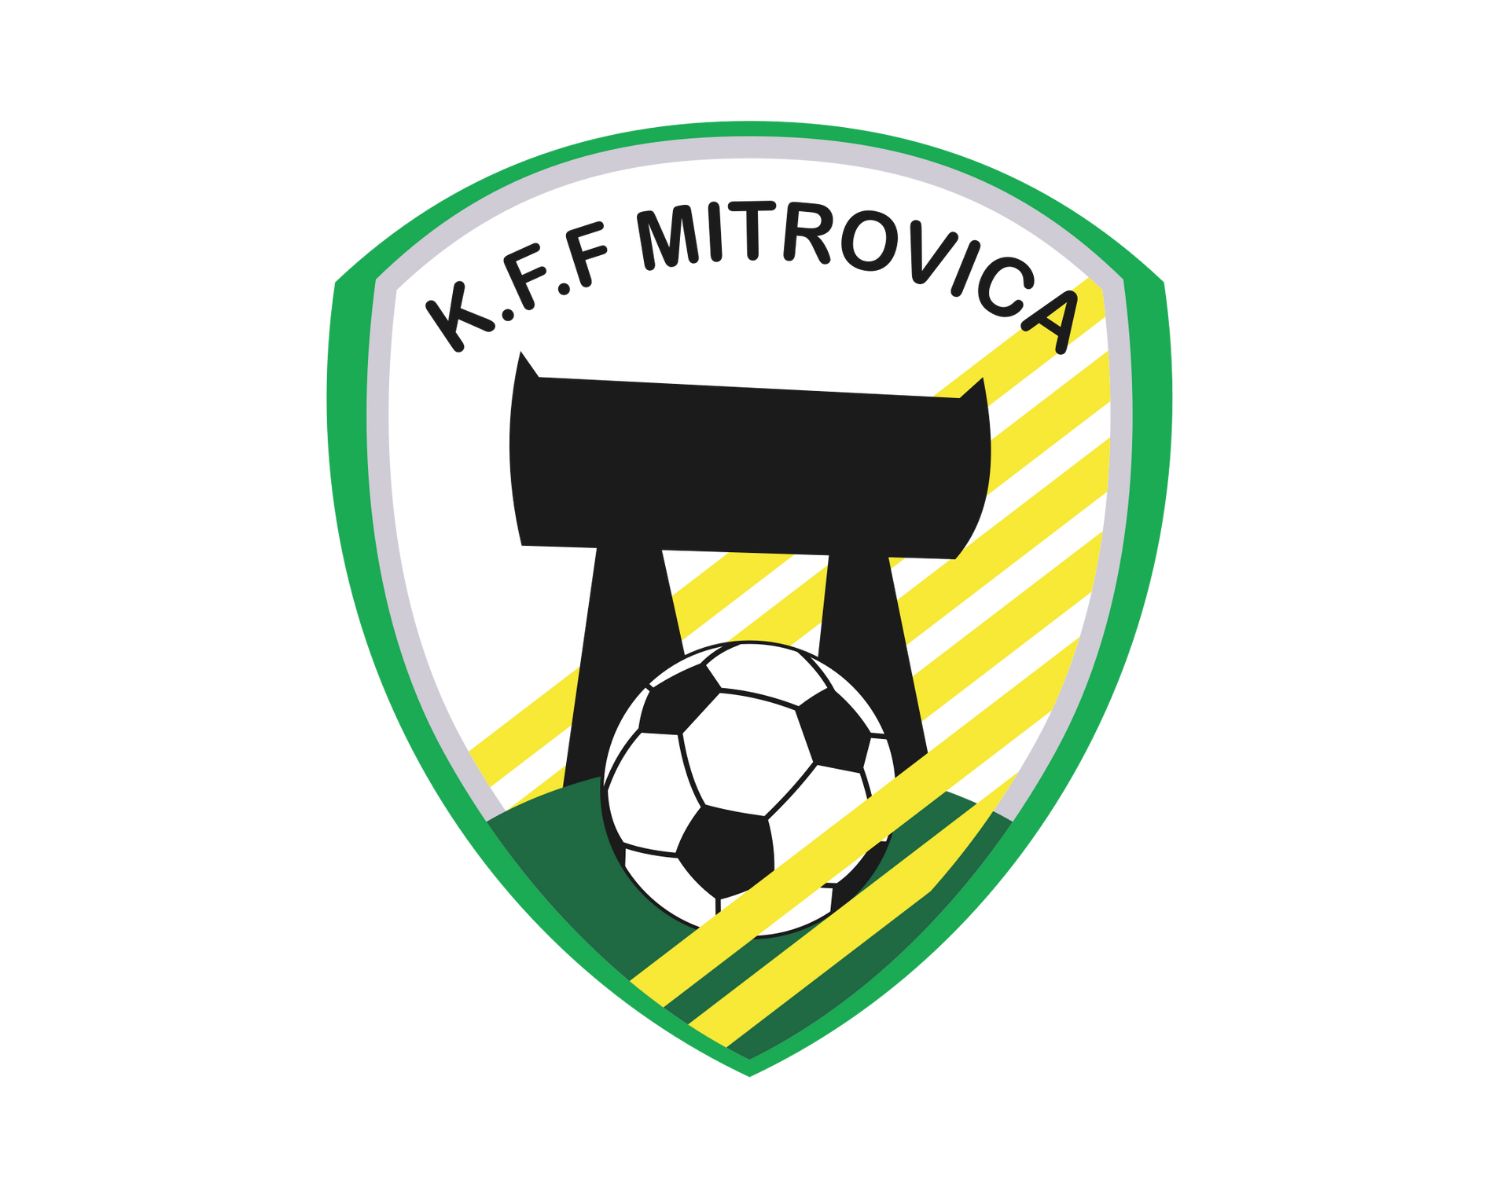 kff-mitrovica-12-football-club-facts